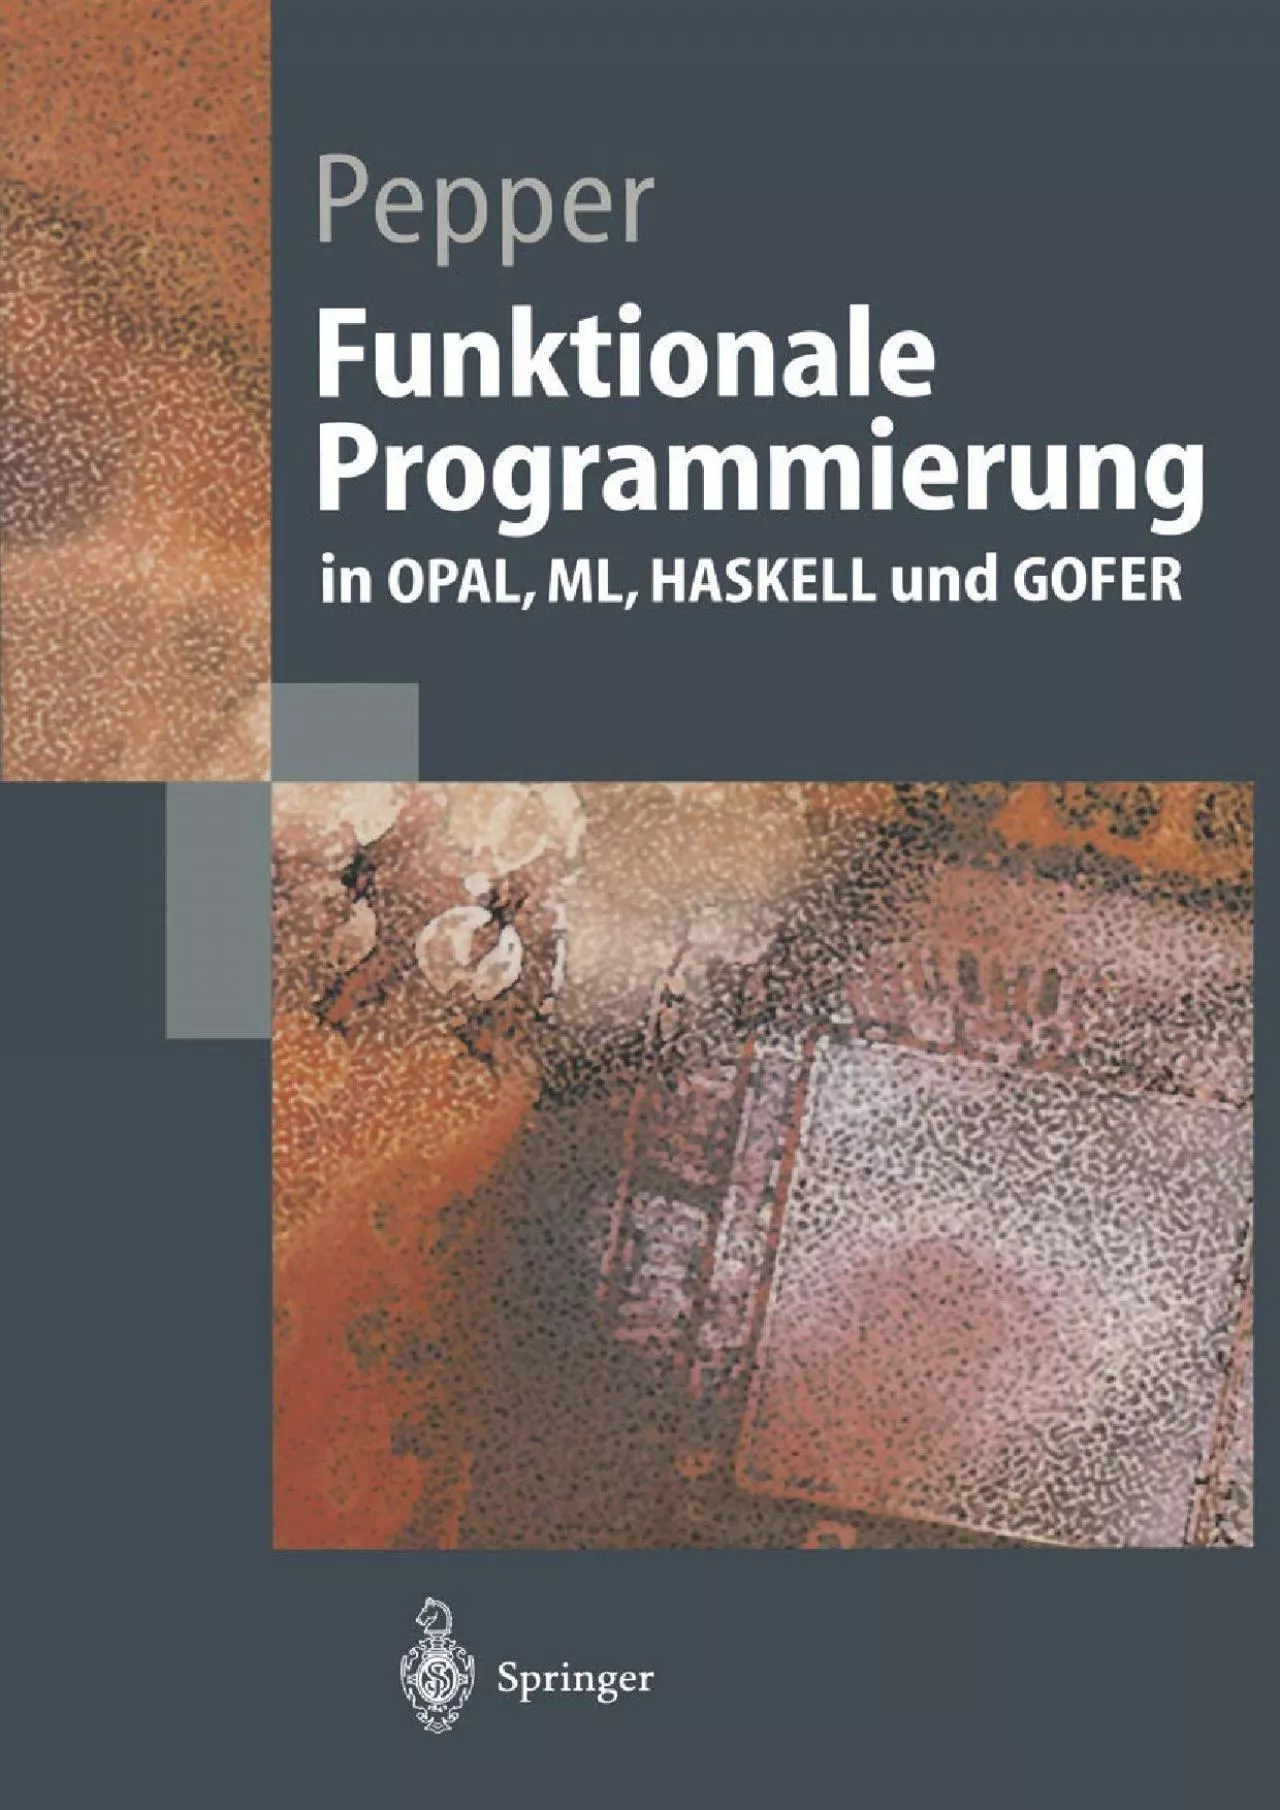 [DOWLOAD]-Funktionale Programmierung: in OPAL, ML, HASKELL und GOFER (Springer-Lehrbuch)